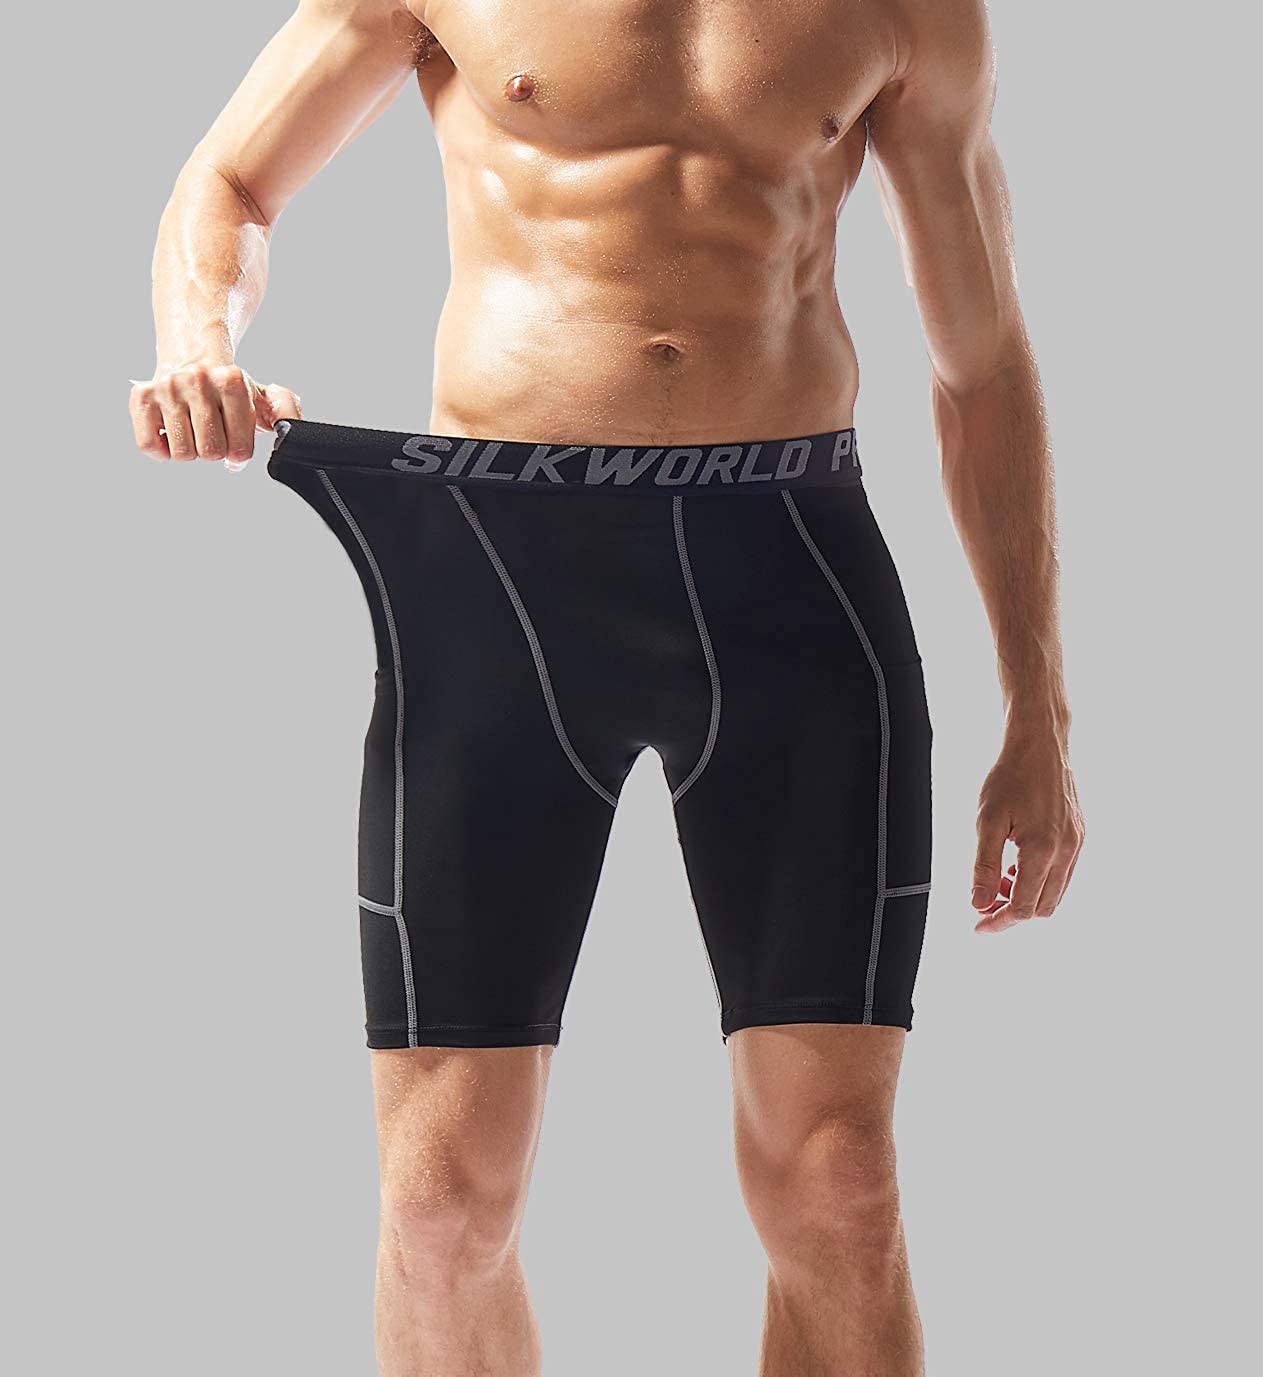  SILKWORLD Mens Thermal Underwear Compression Leggings